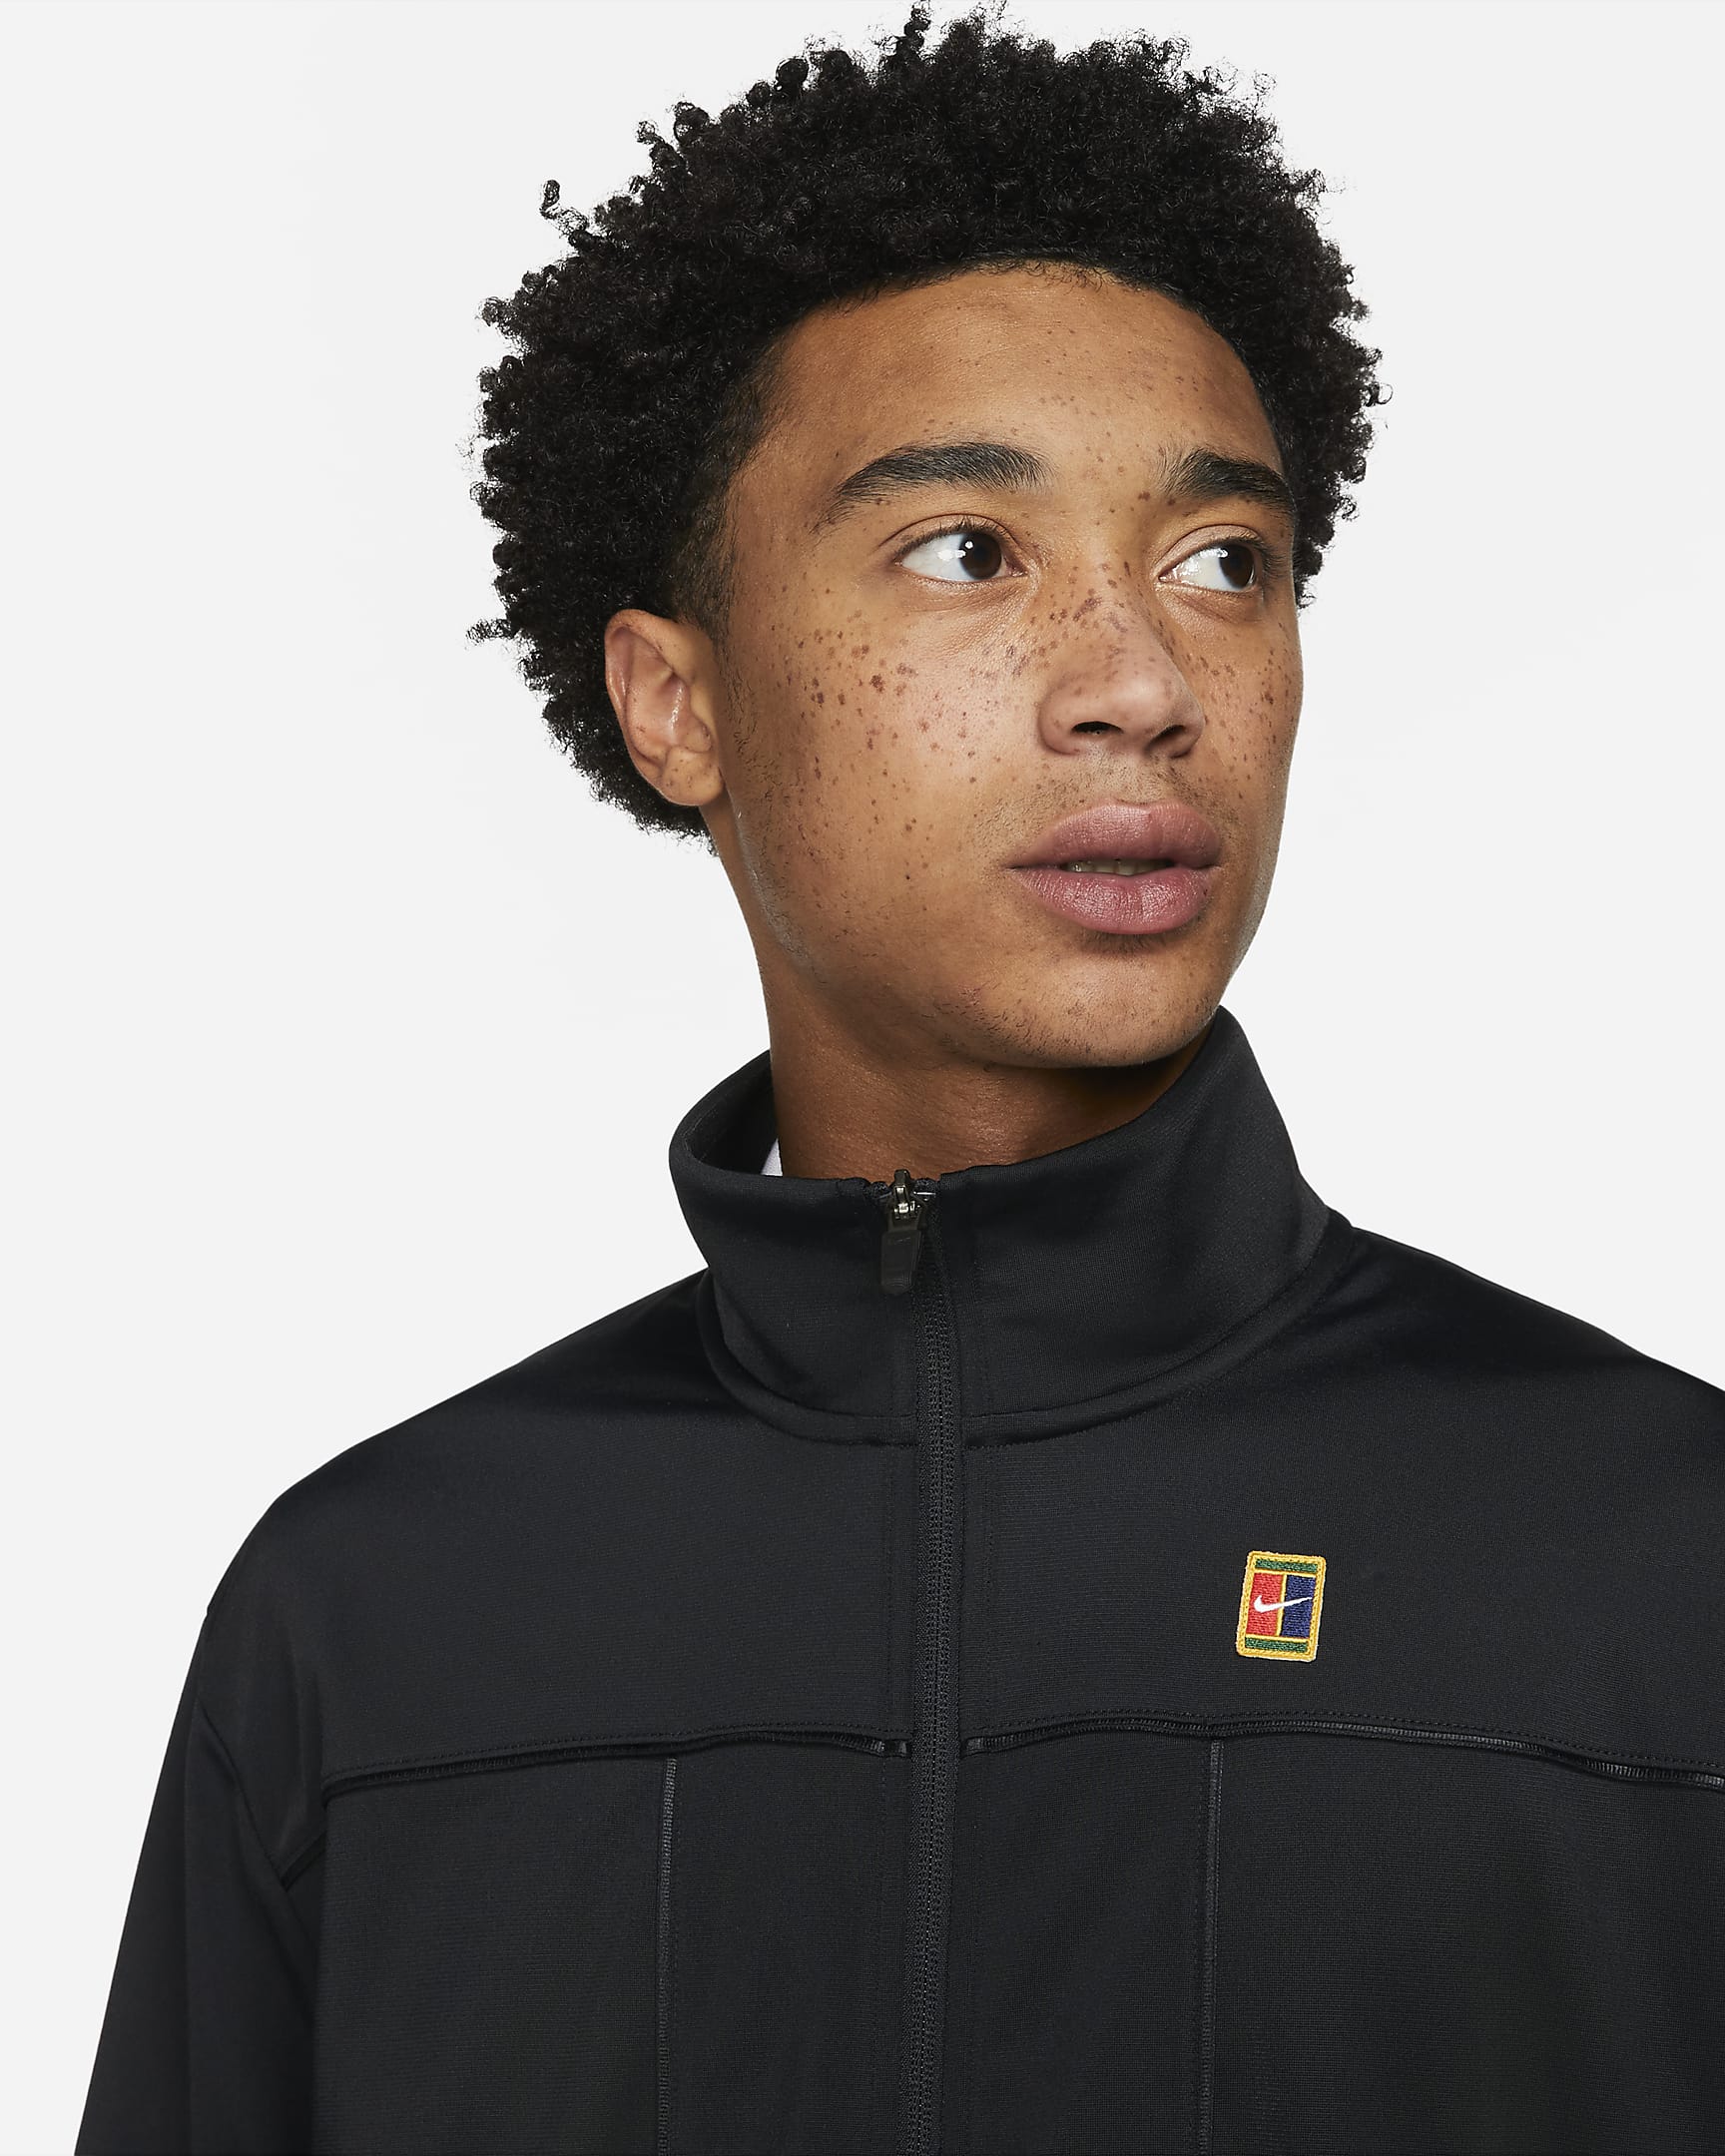 NikeCourt Men's Tennis Jacket - Black